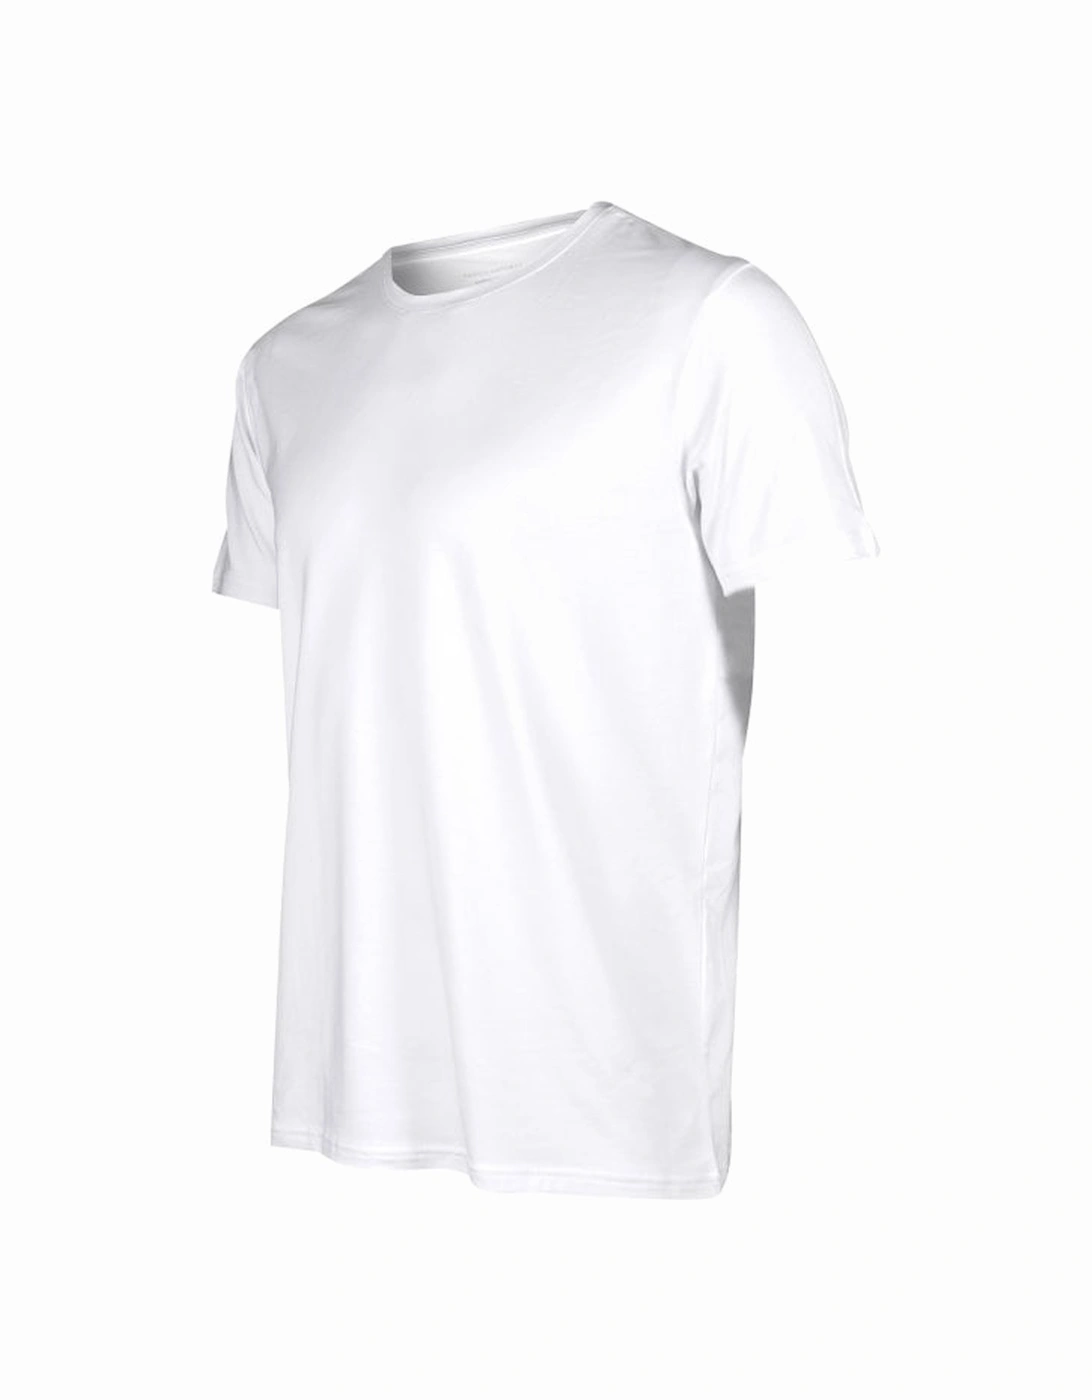 Bamboo Cotton Crew-Neck T-Shirt, White